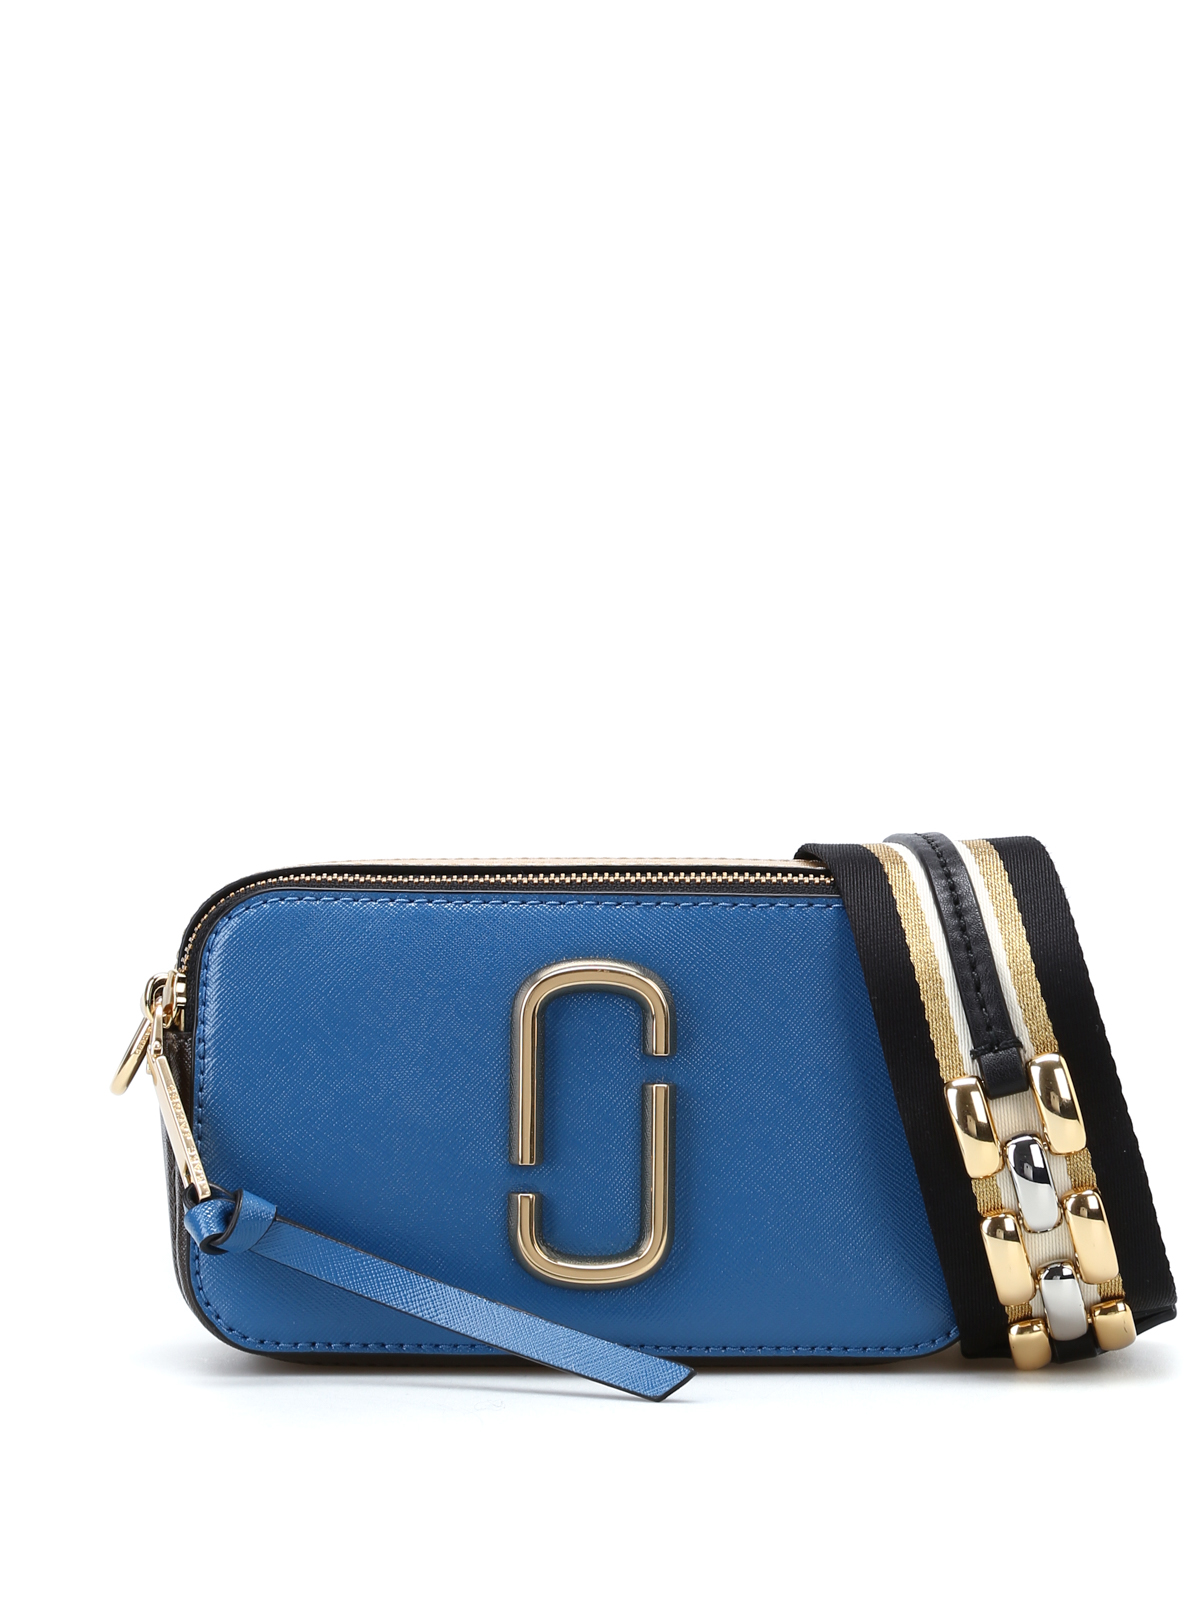 Marc Jacobs Blue Small Snapshot Bag